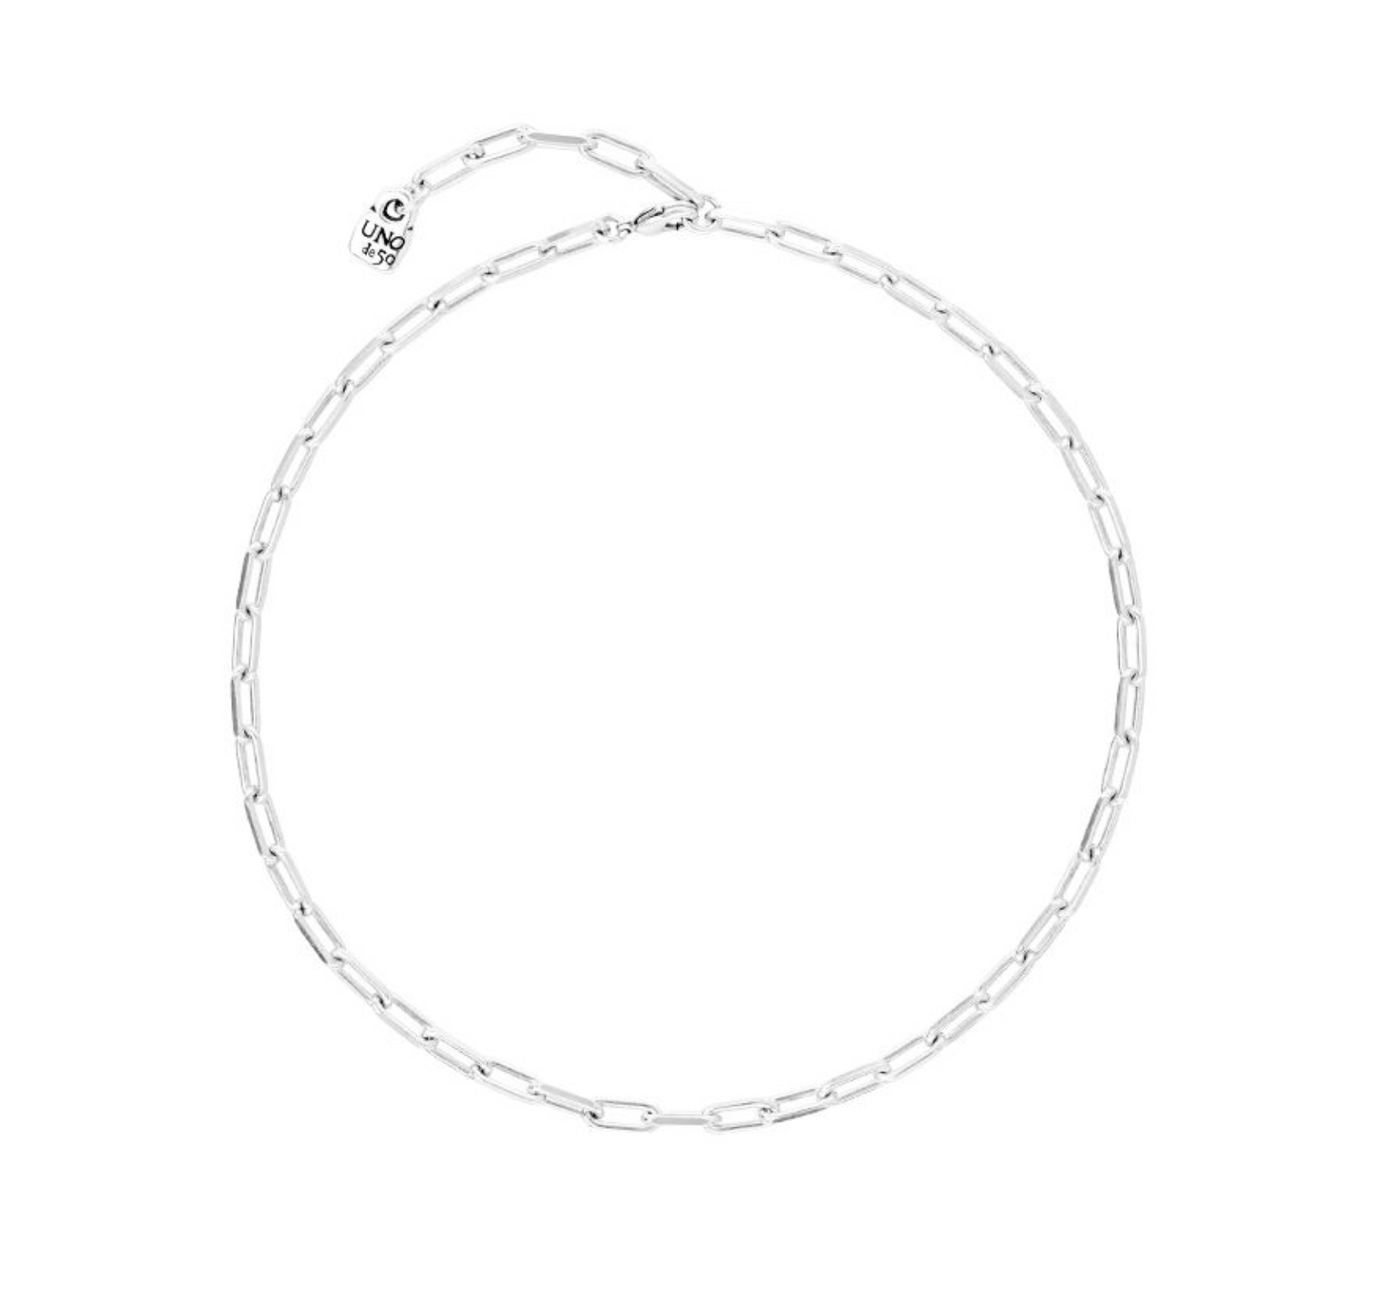 Short Paperchain Silver Necklace